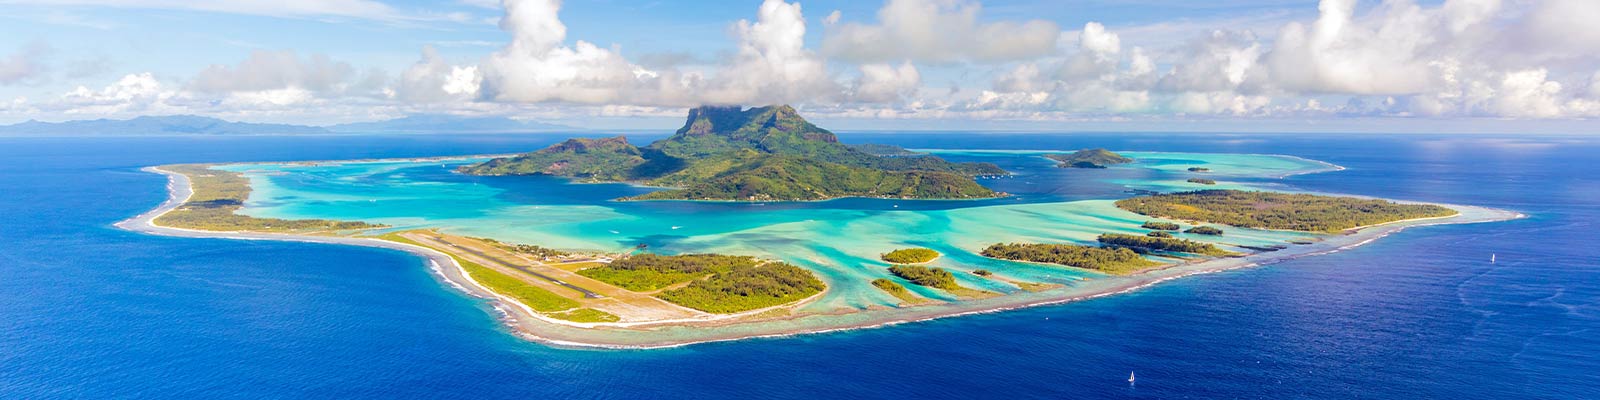 Polinesia Francesa | Bora Bora